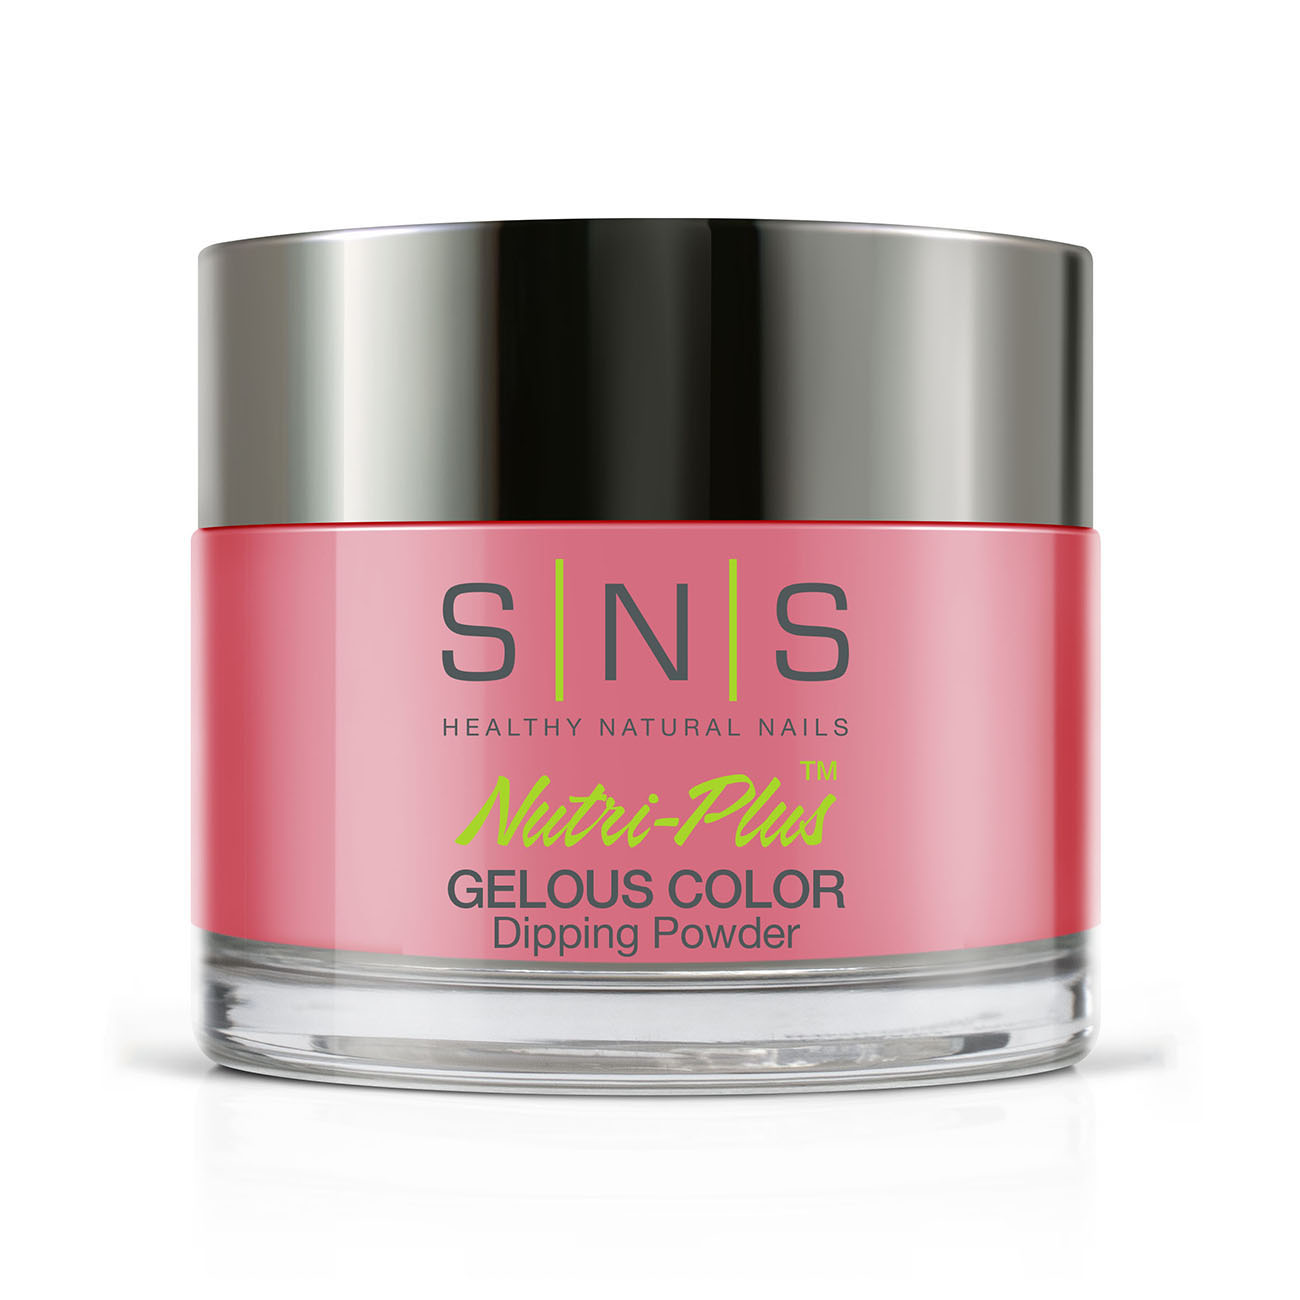 SNS Nails DS07 Little Squash Blossom 28g (1oz) | Gelous Dipping Powder